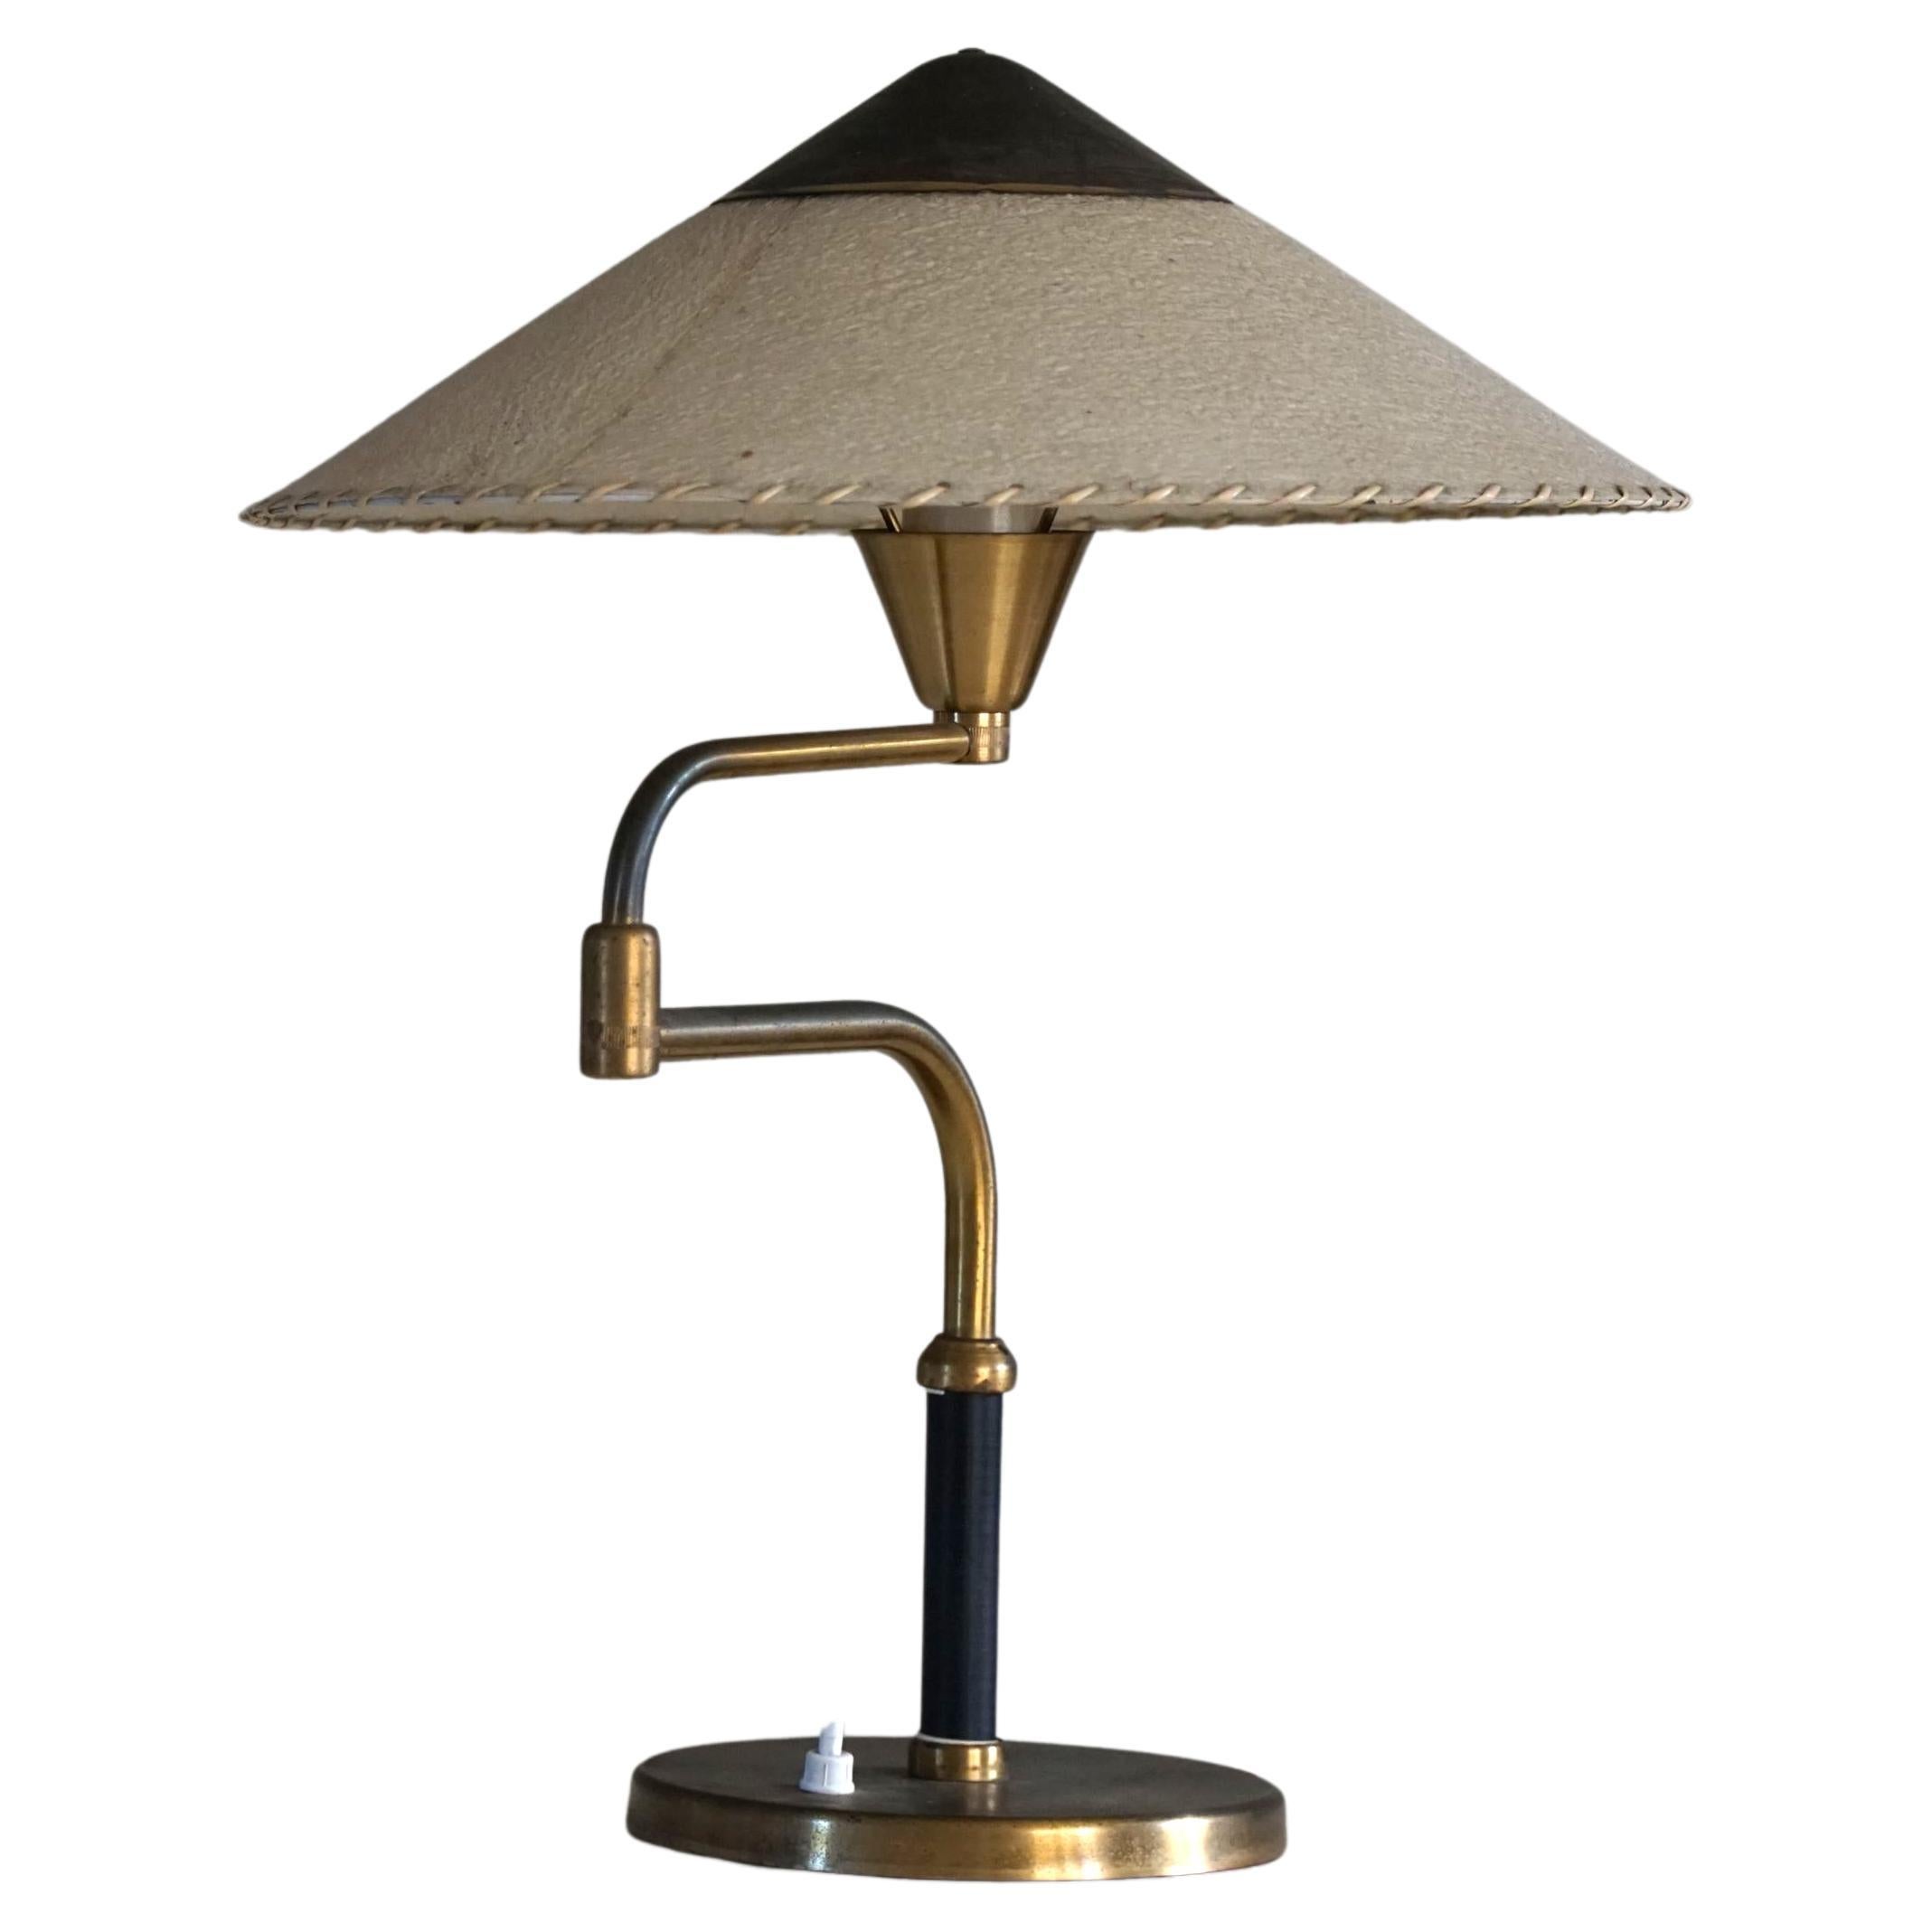 Bent Karlby for LYFA, Adjustable Table Lamp, Danish Mid Century Modern, 1950s For Sale